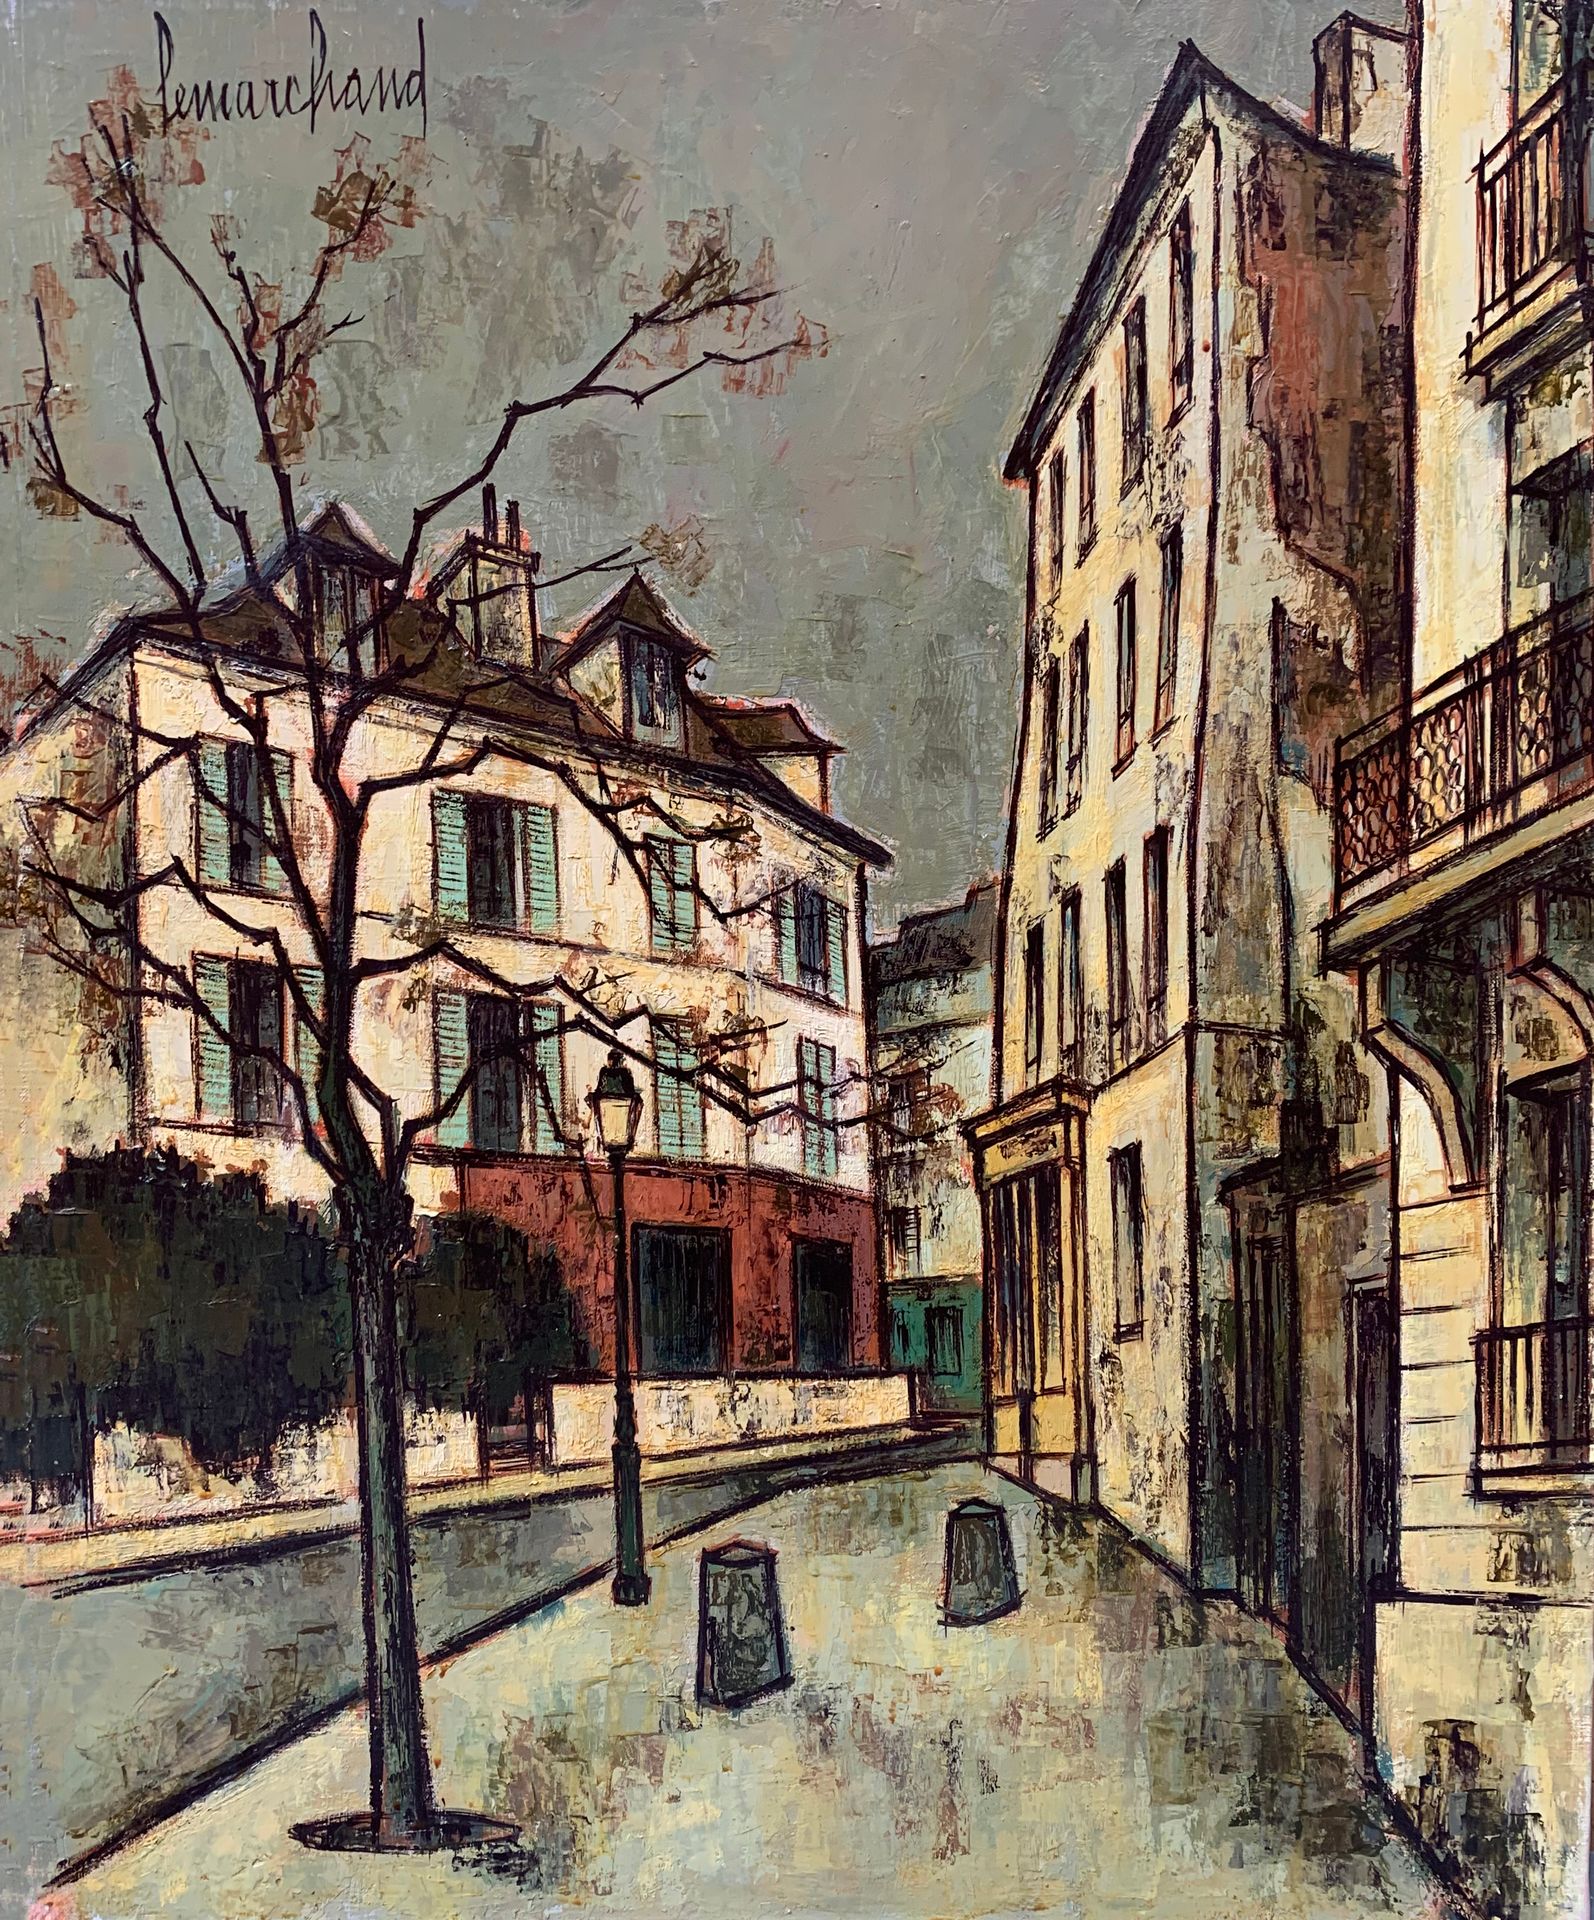 Null 皮埃尔-莱马赫德 (1906-1970)

蒙马特有灯柱的街道

布面油画，左上角有签名

73 x 60厘米。